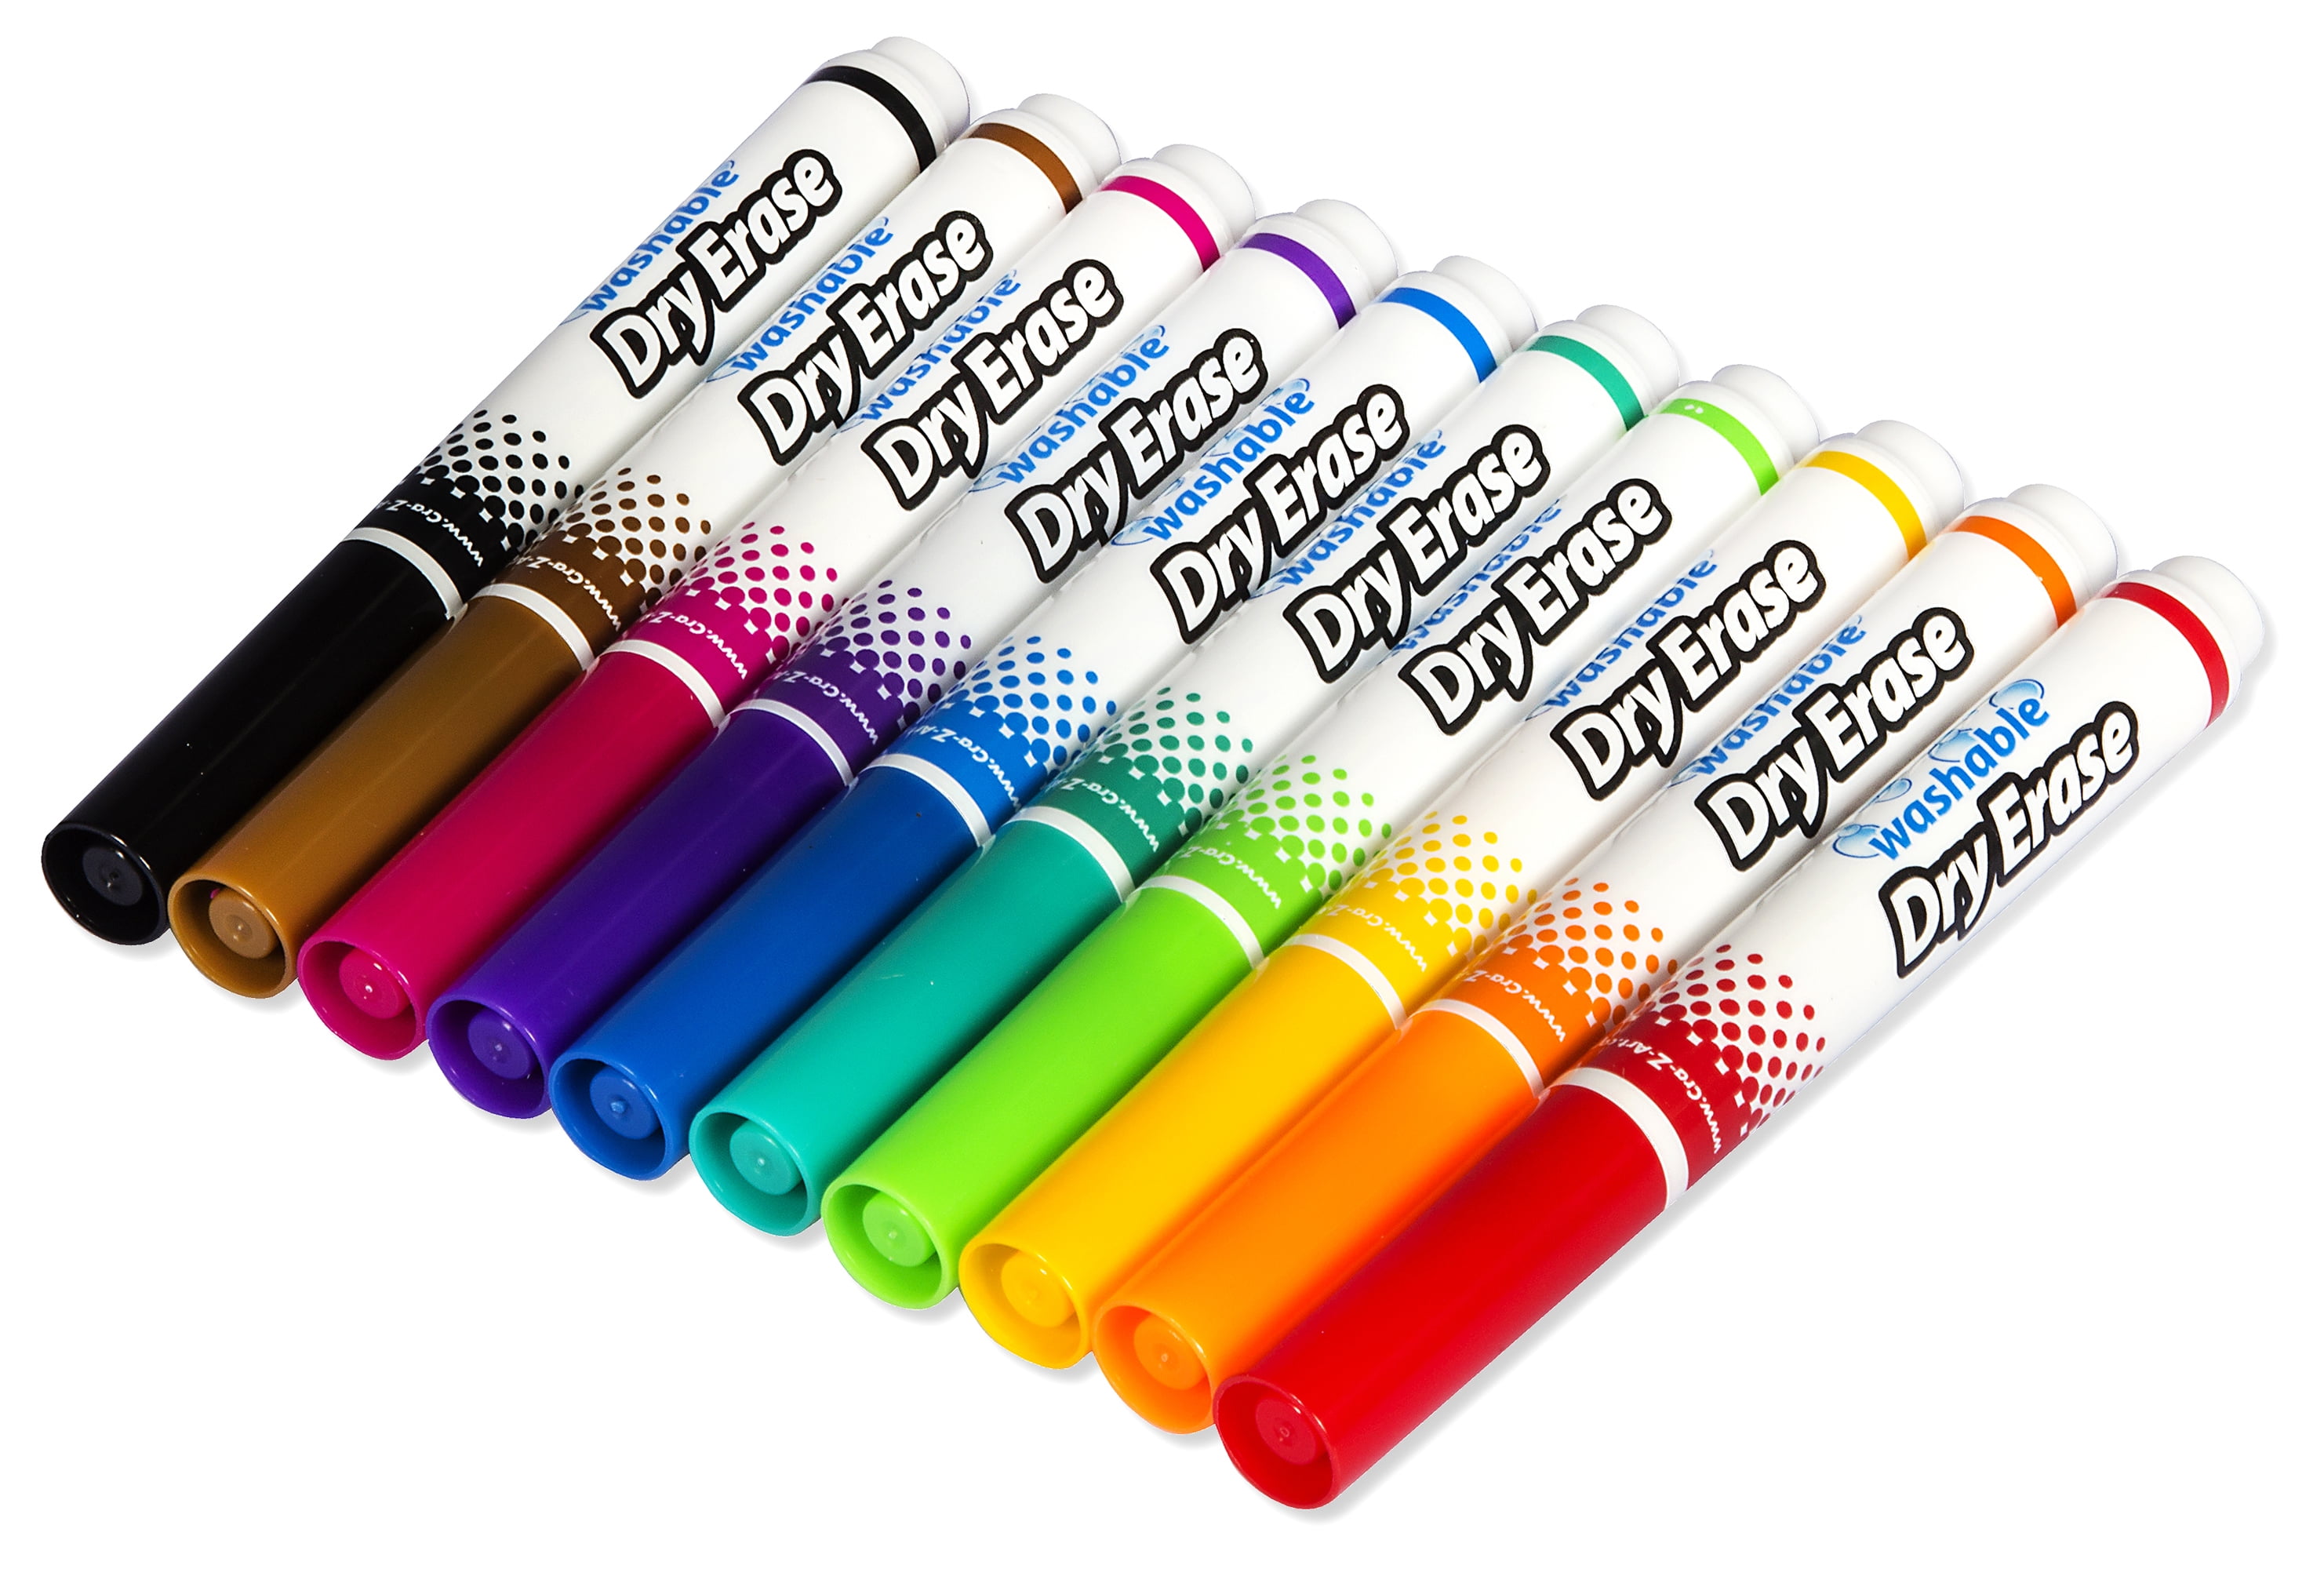 Cra-Z-Art® Colorsharp Permanent Markers